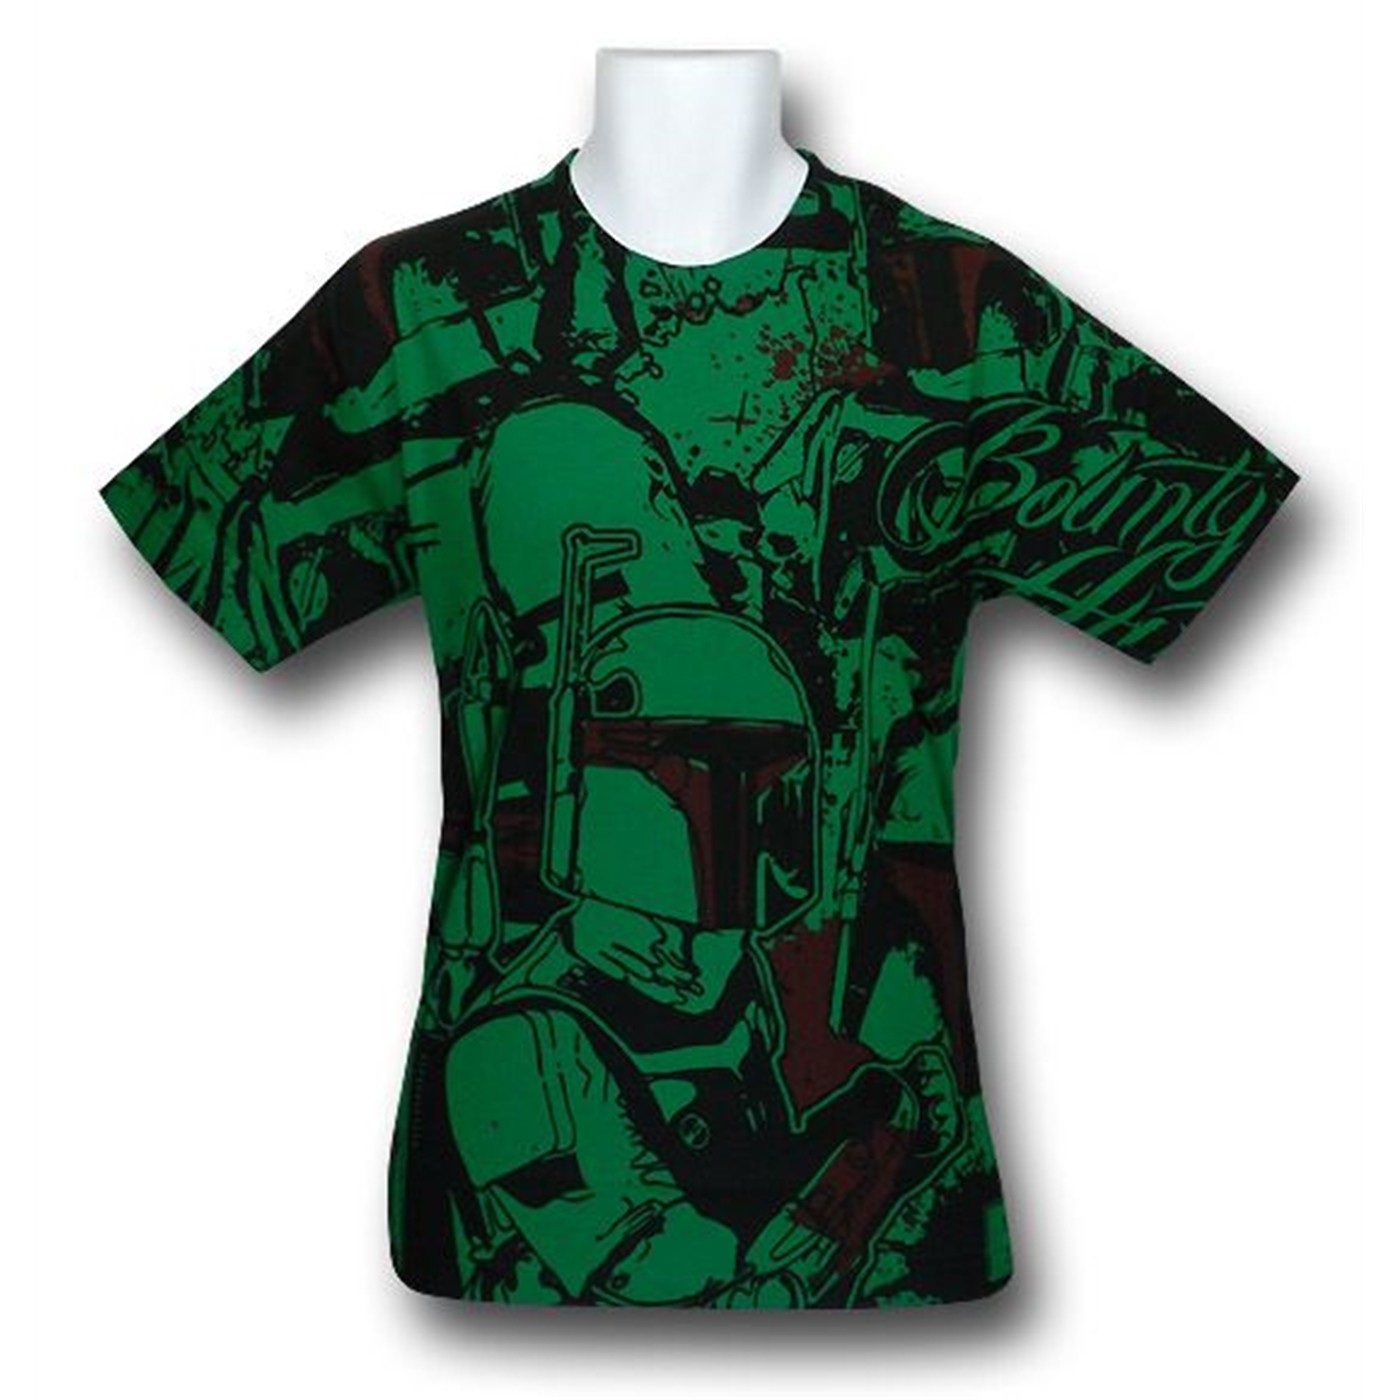 Boba Fett Sublimated Killer Green T-Shirt